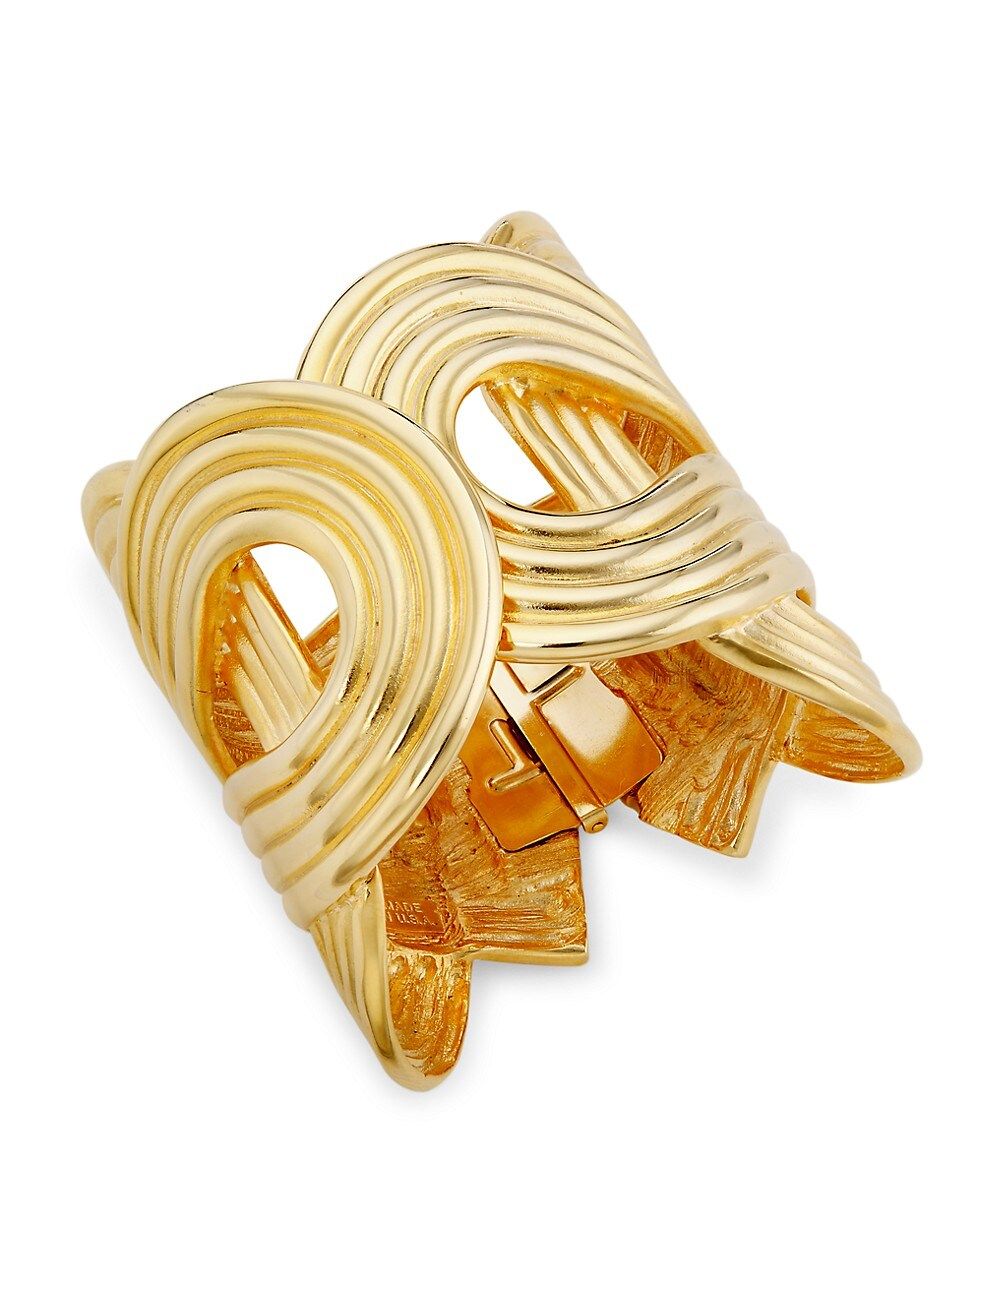 Swirl 22K-Gold-Plated Hinge Cuff Bracelet | Saks Fifth Avenue